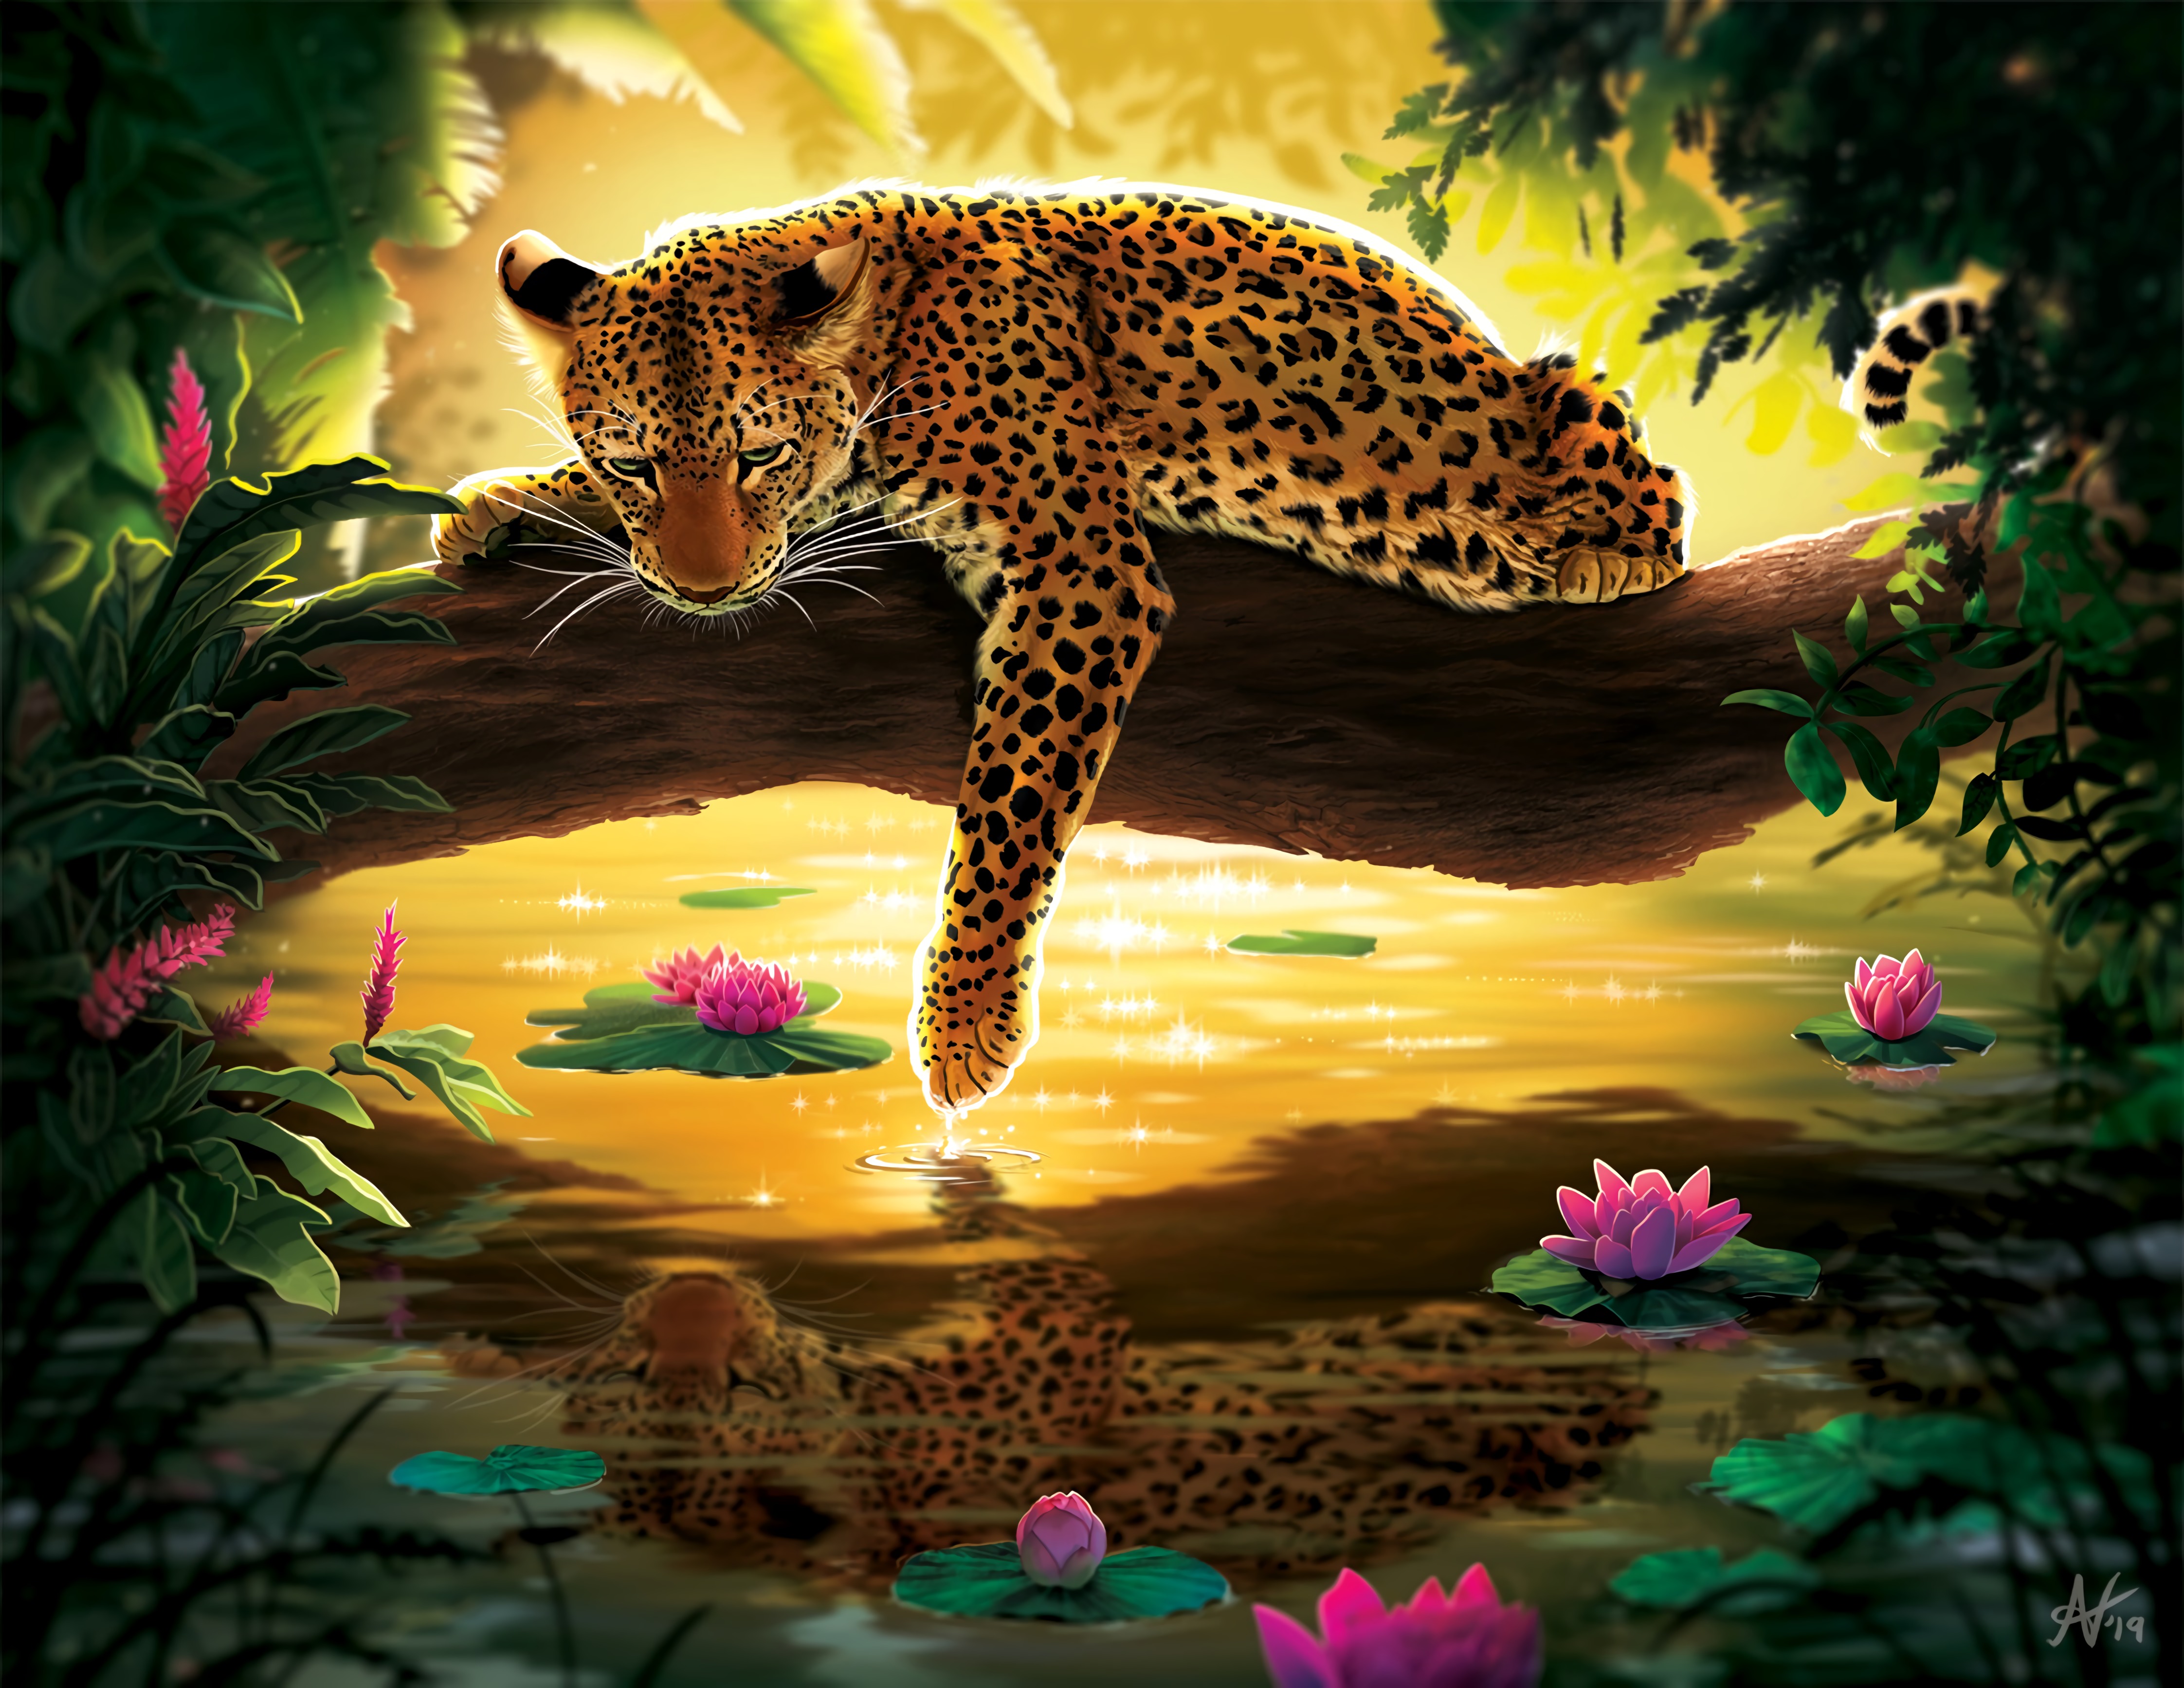 General 4488x3468 animals nature leopard flowers plants water leaves artwork digital art